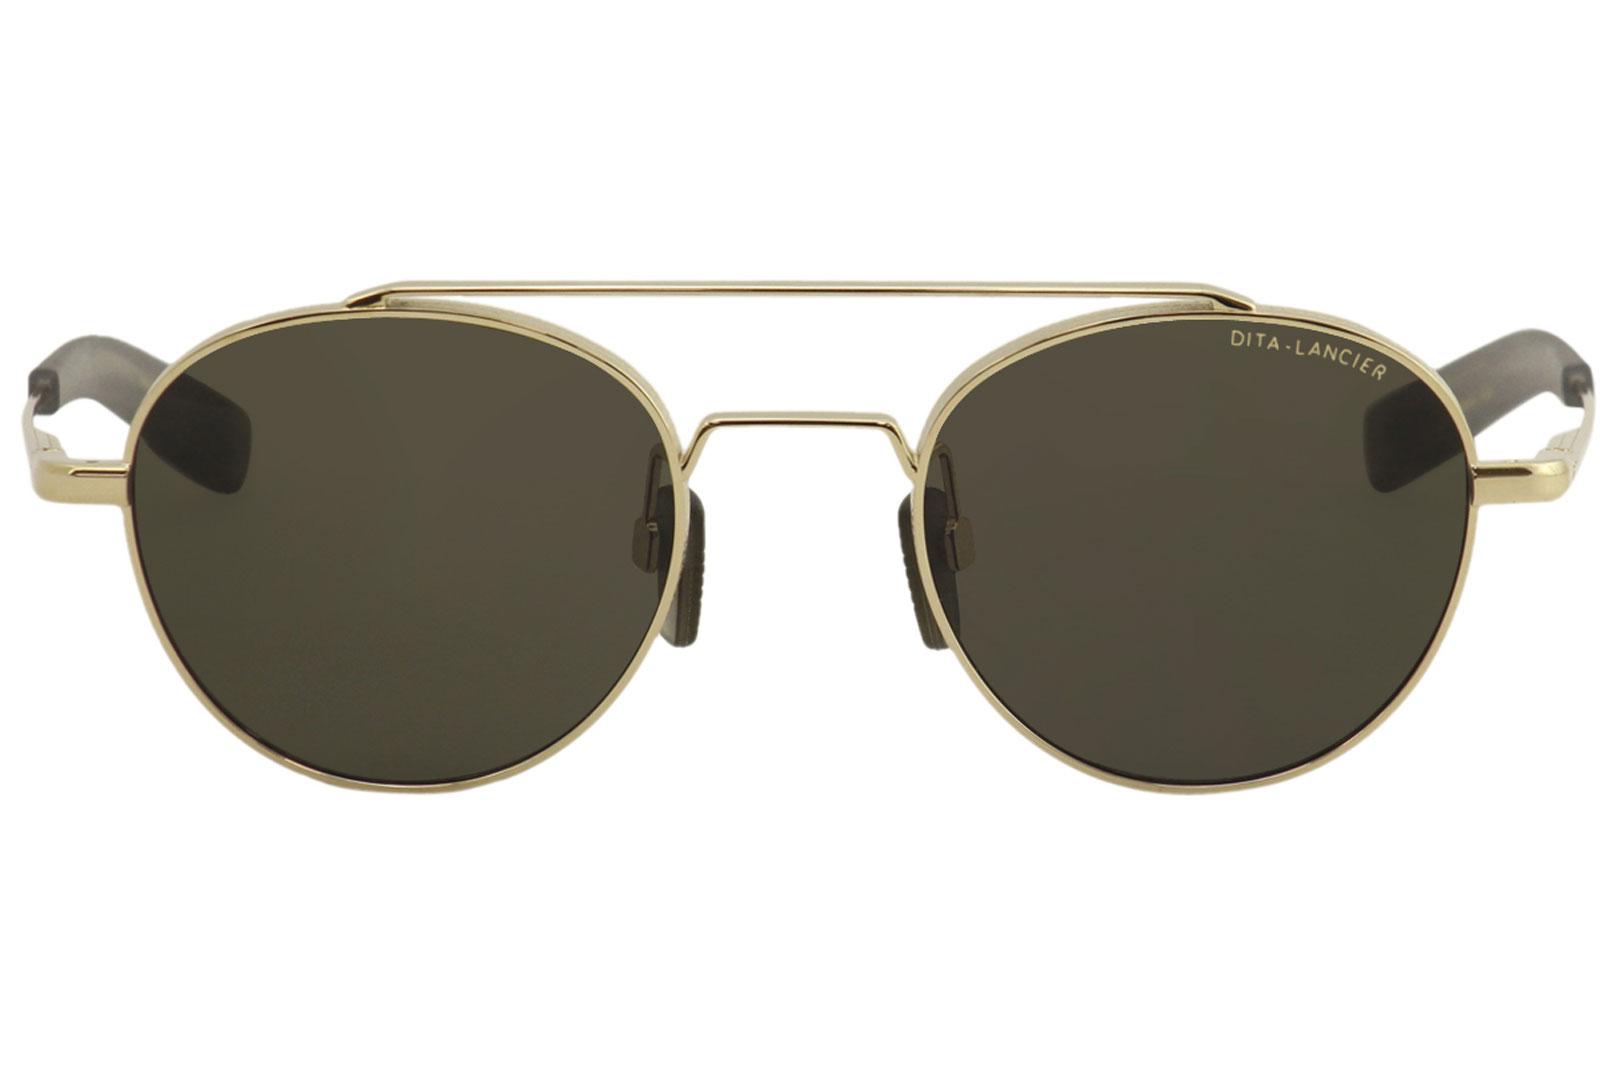 Dita Lancier Men's DLS103 DLS/103 02 White Gold Round Sunglasses 50mm ...